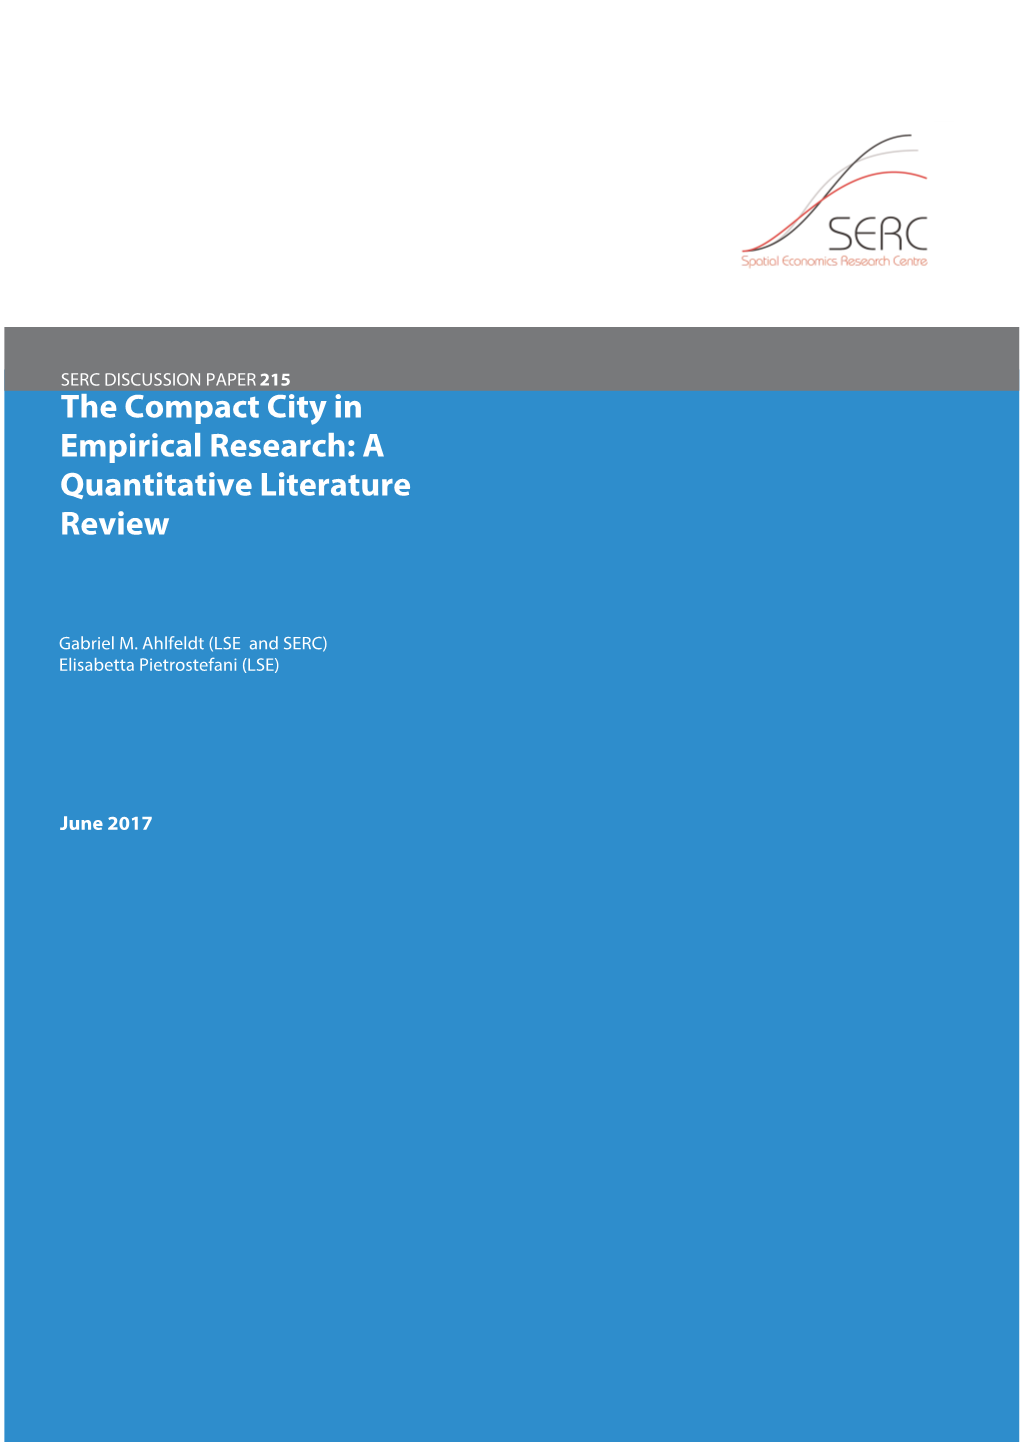 The Compact City in Empirical Research: a Quantitative Literature Review